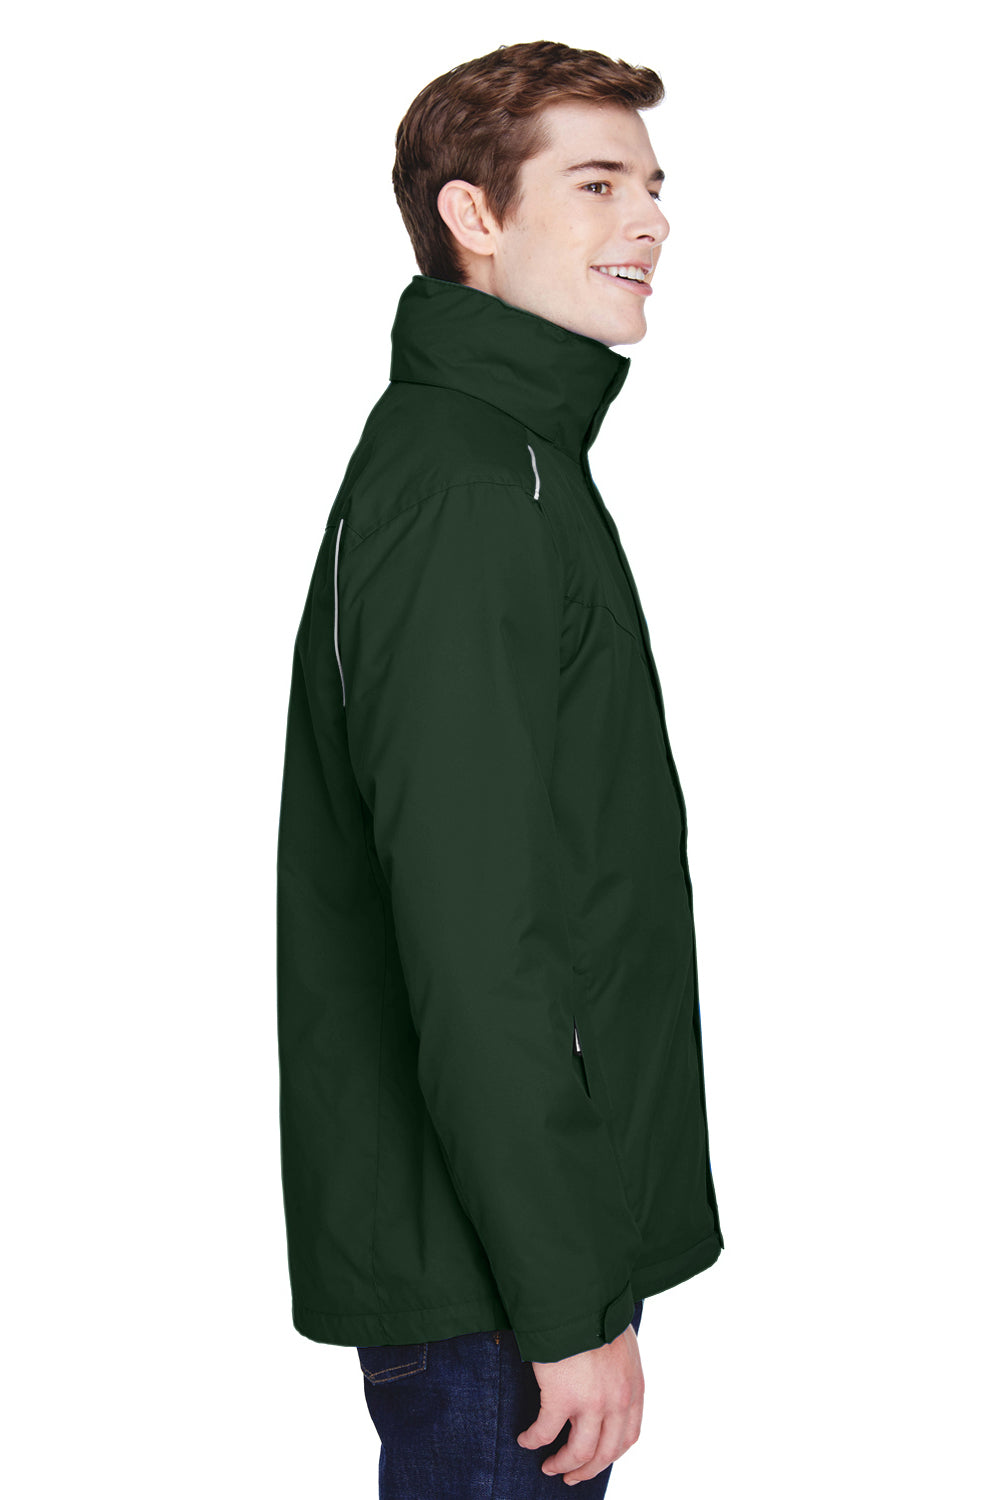 Core 365 88205 Mens Region 3-in-1 Water Resistant Full Zip Hooded Jacket Forest Green Side